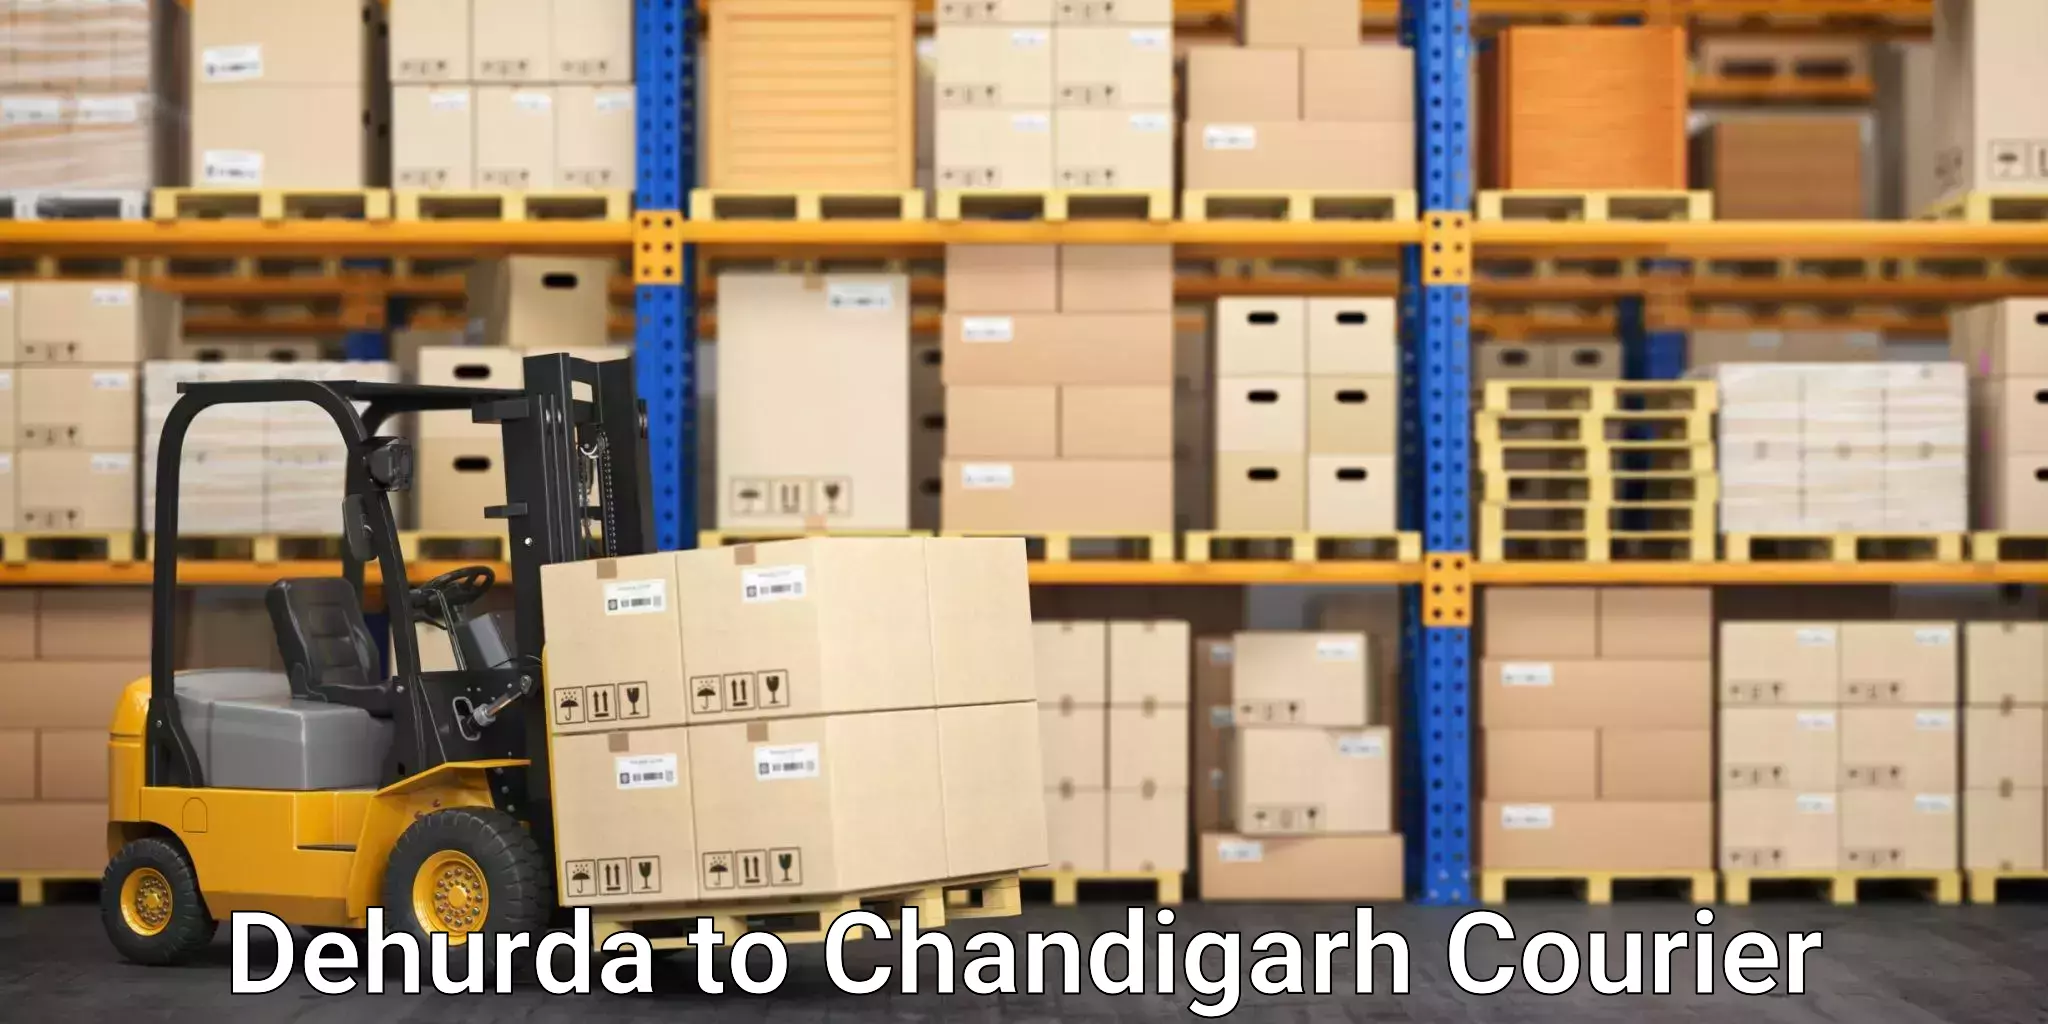 Fast-track shipping solutions Dehurda to Chandigarh